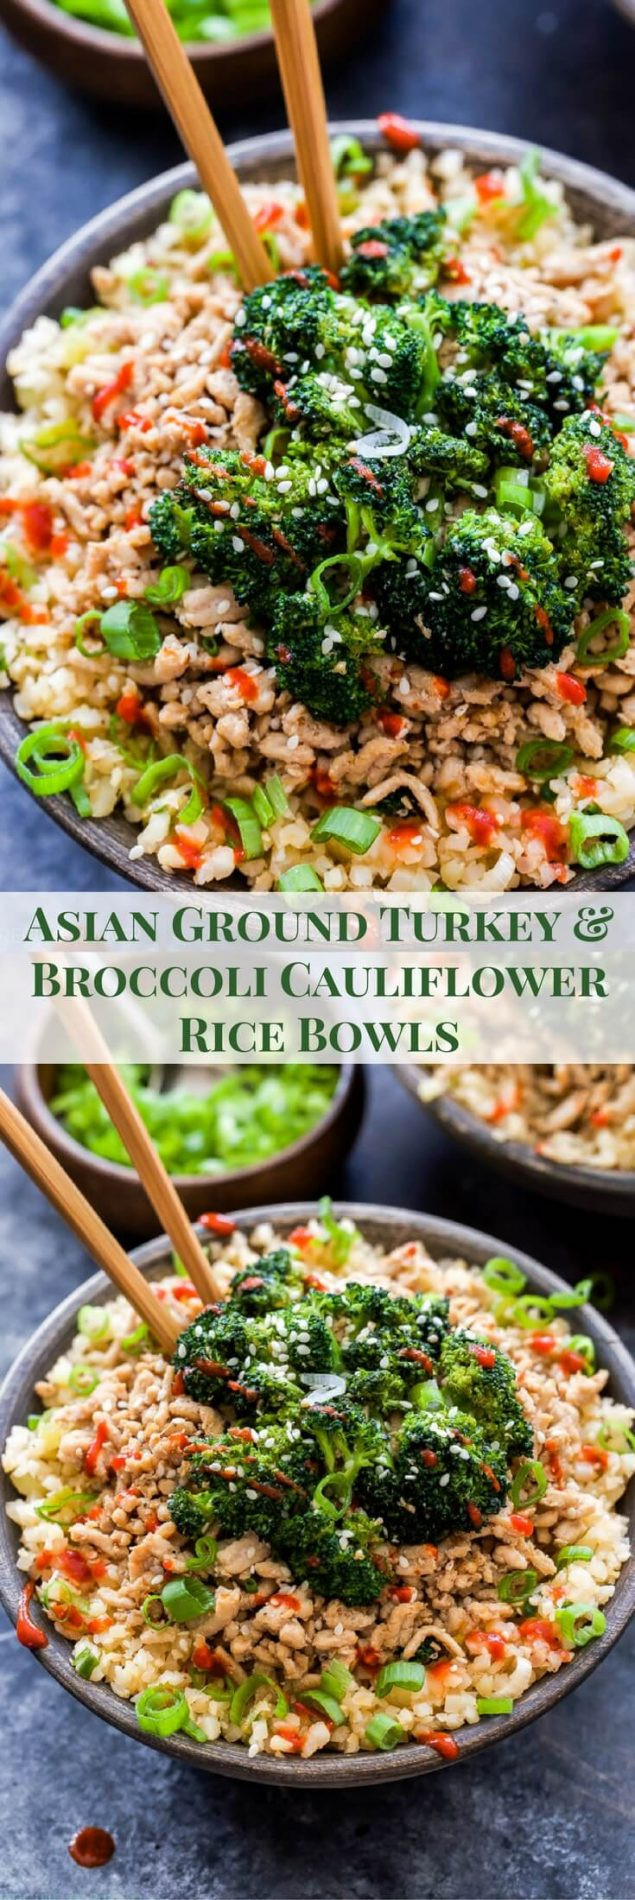 Asian Ground Turkey Recipes
 Asian Ground Turkey and Broccoli Cauliflower Rice Bowls